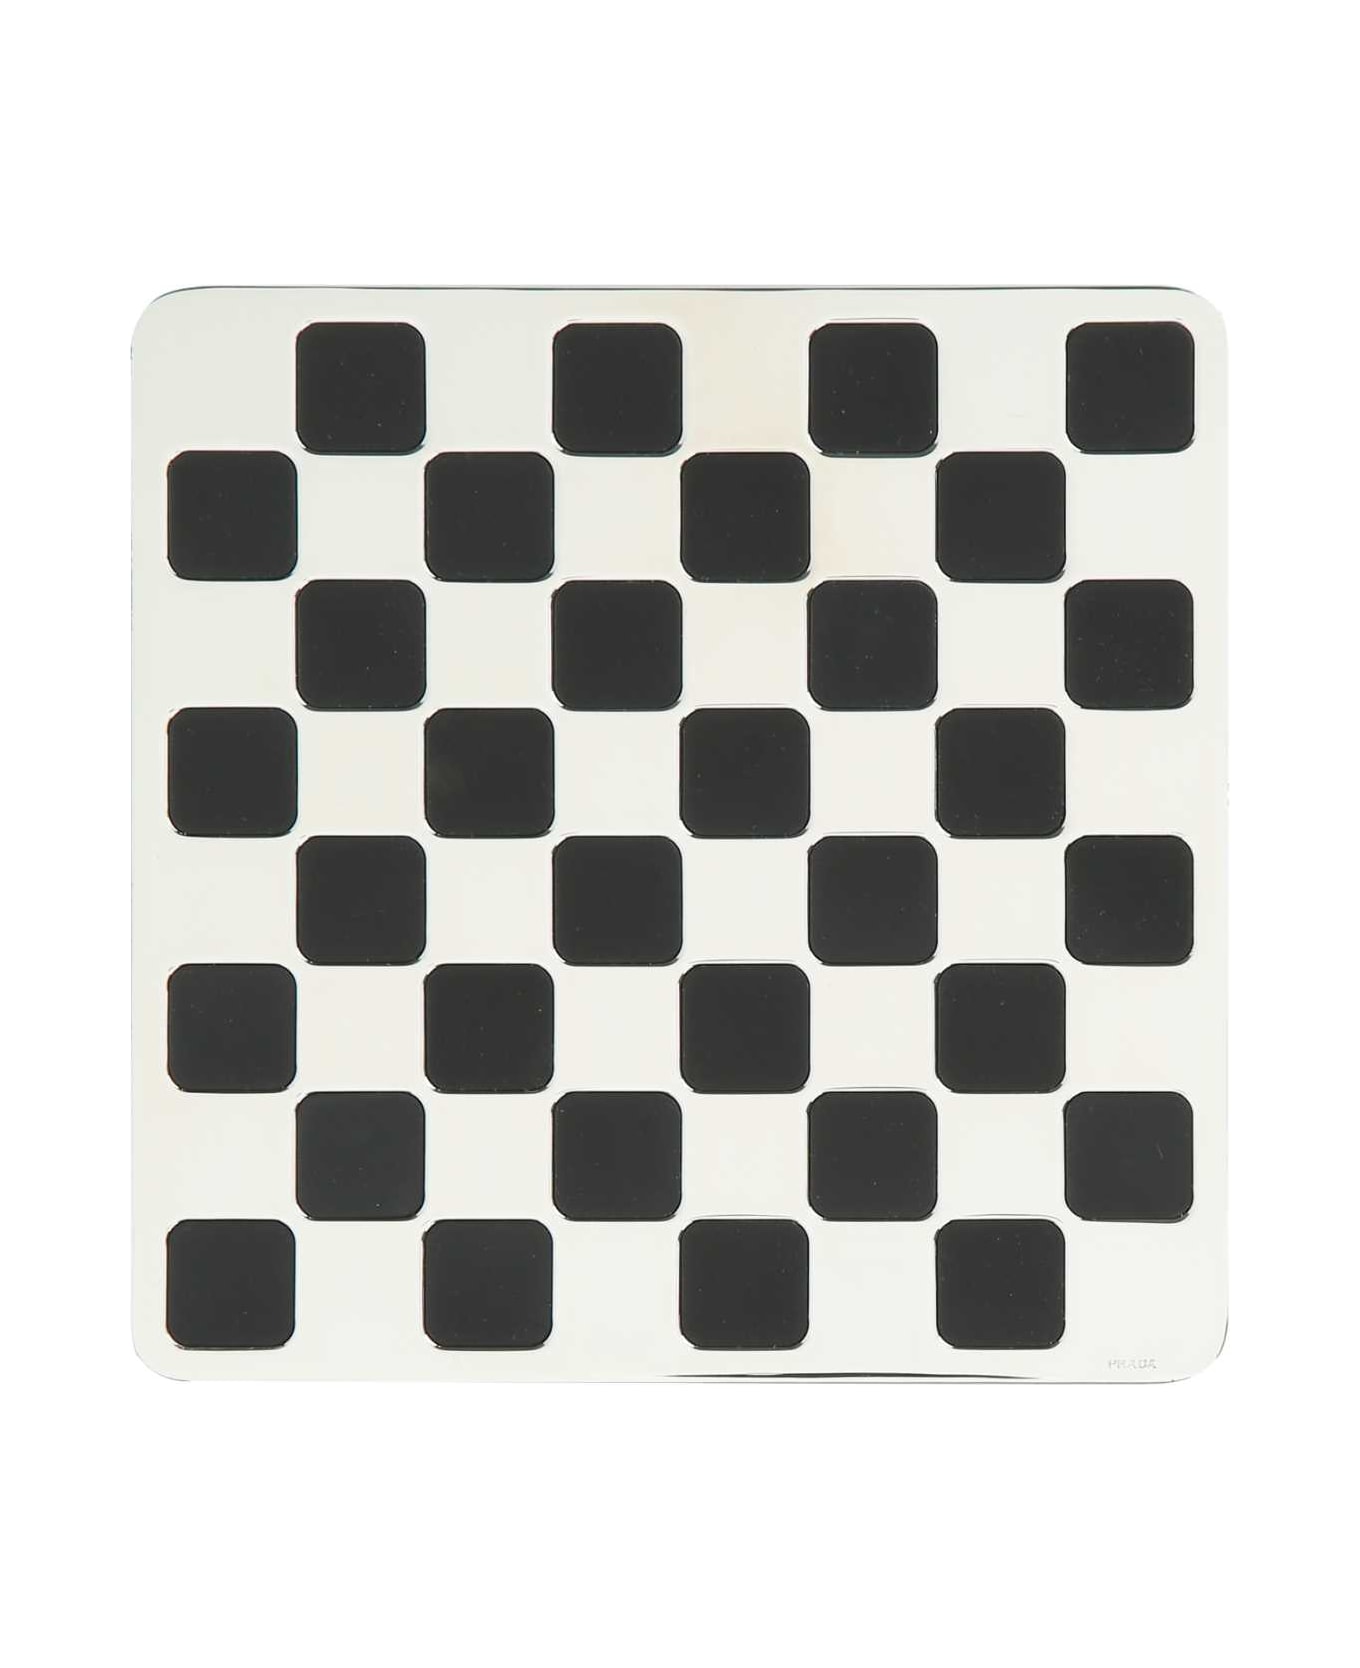 Prada Checkers Game Kit - NERO